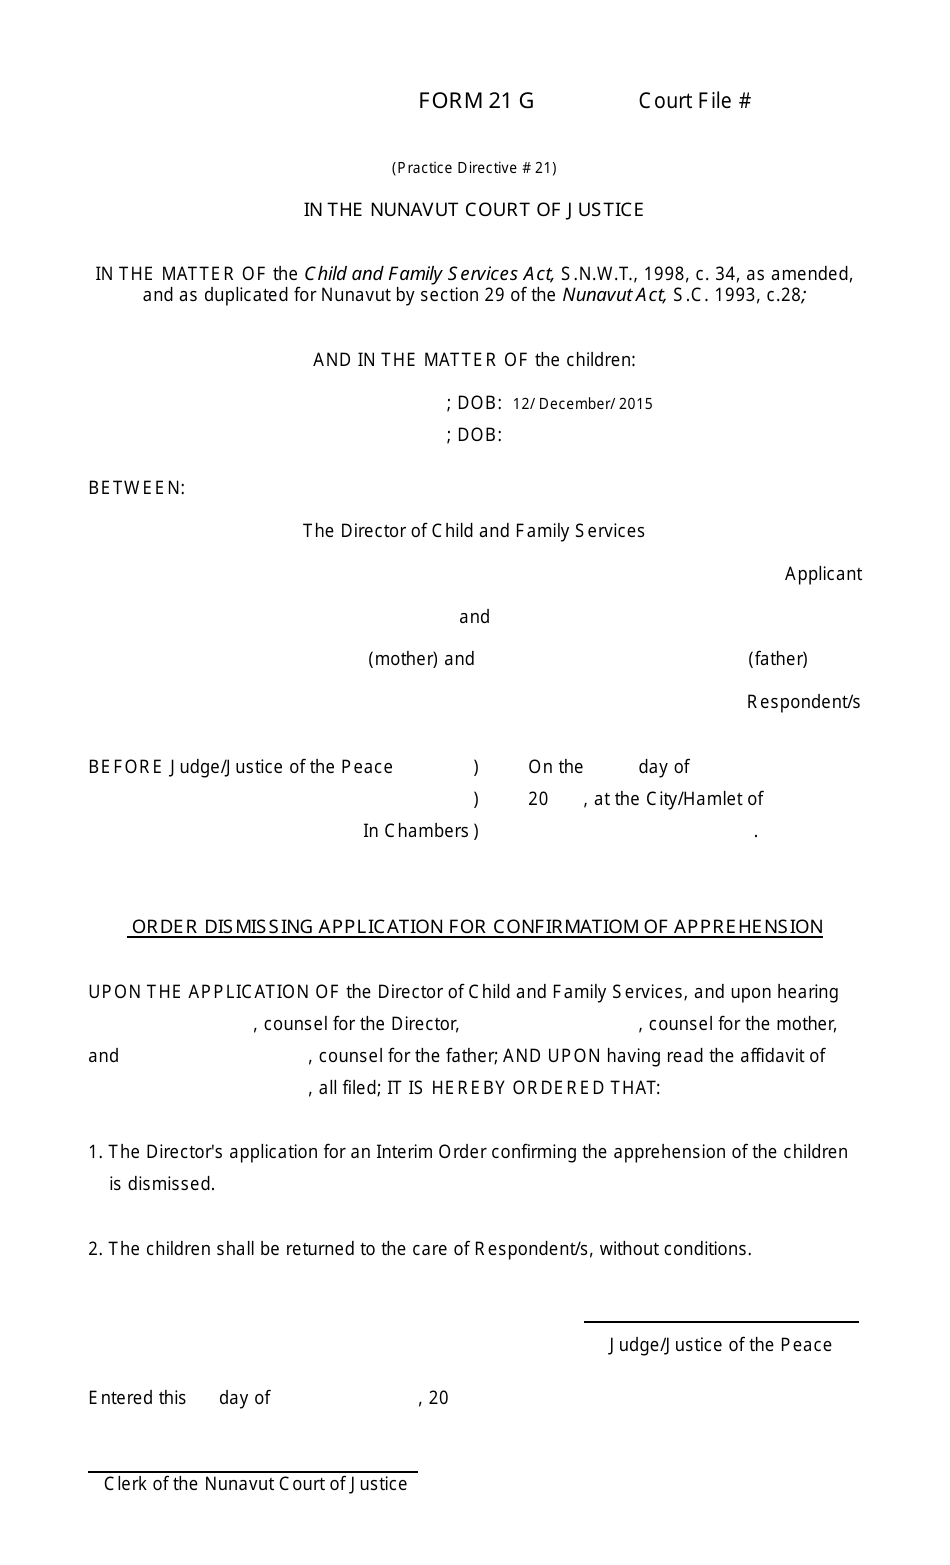 Form 21 G Order Dismissing Application for Confirmation of Apprehension - Nunavut, Canada, Page 1